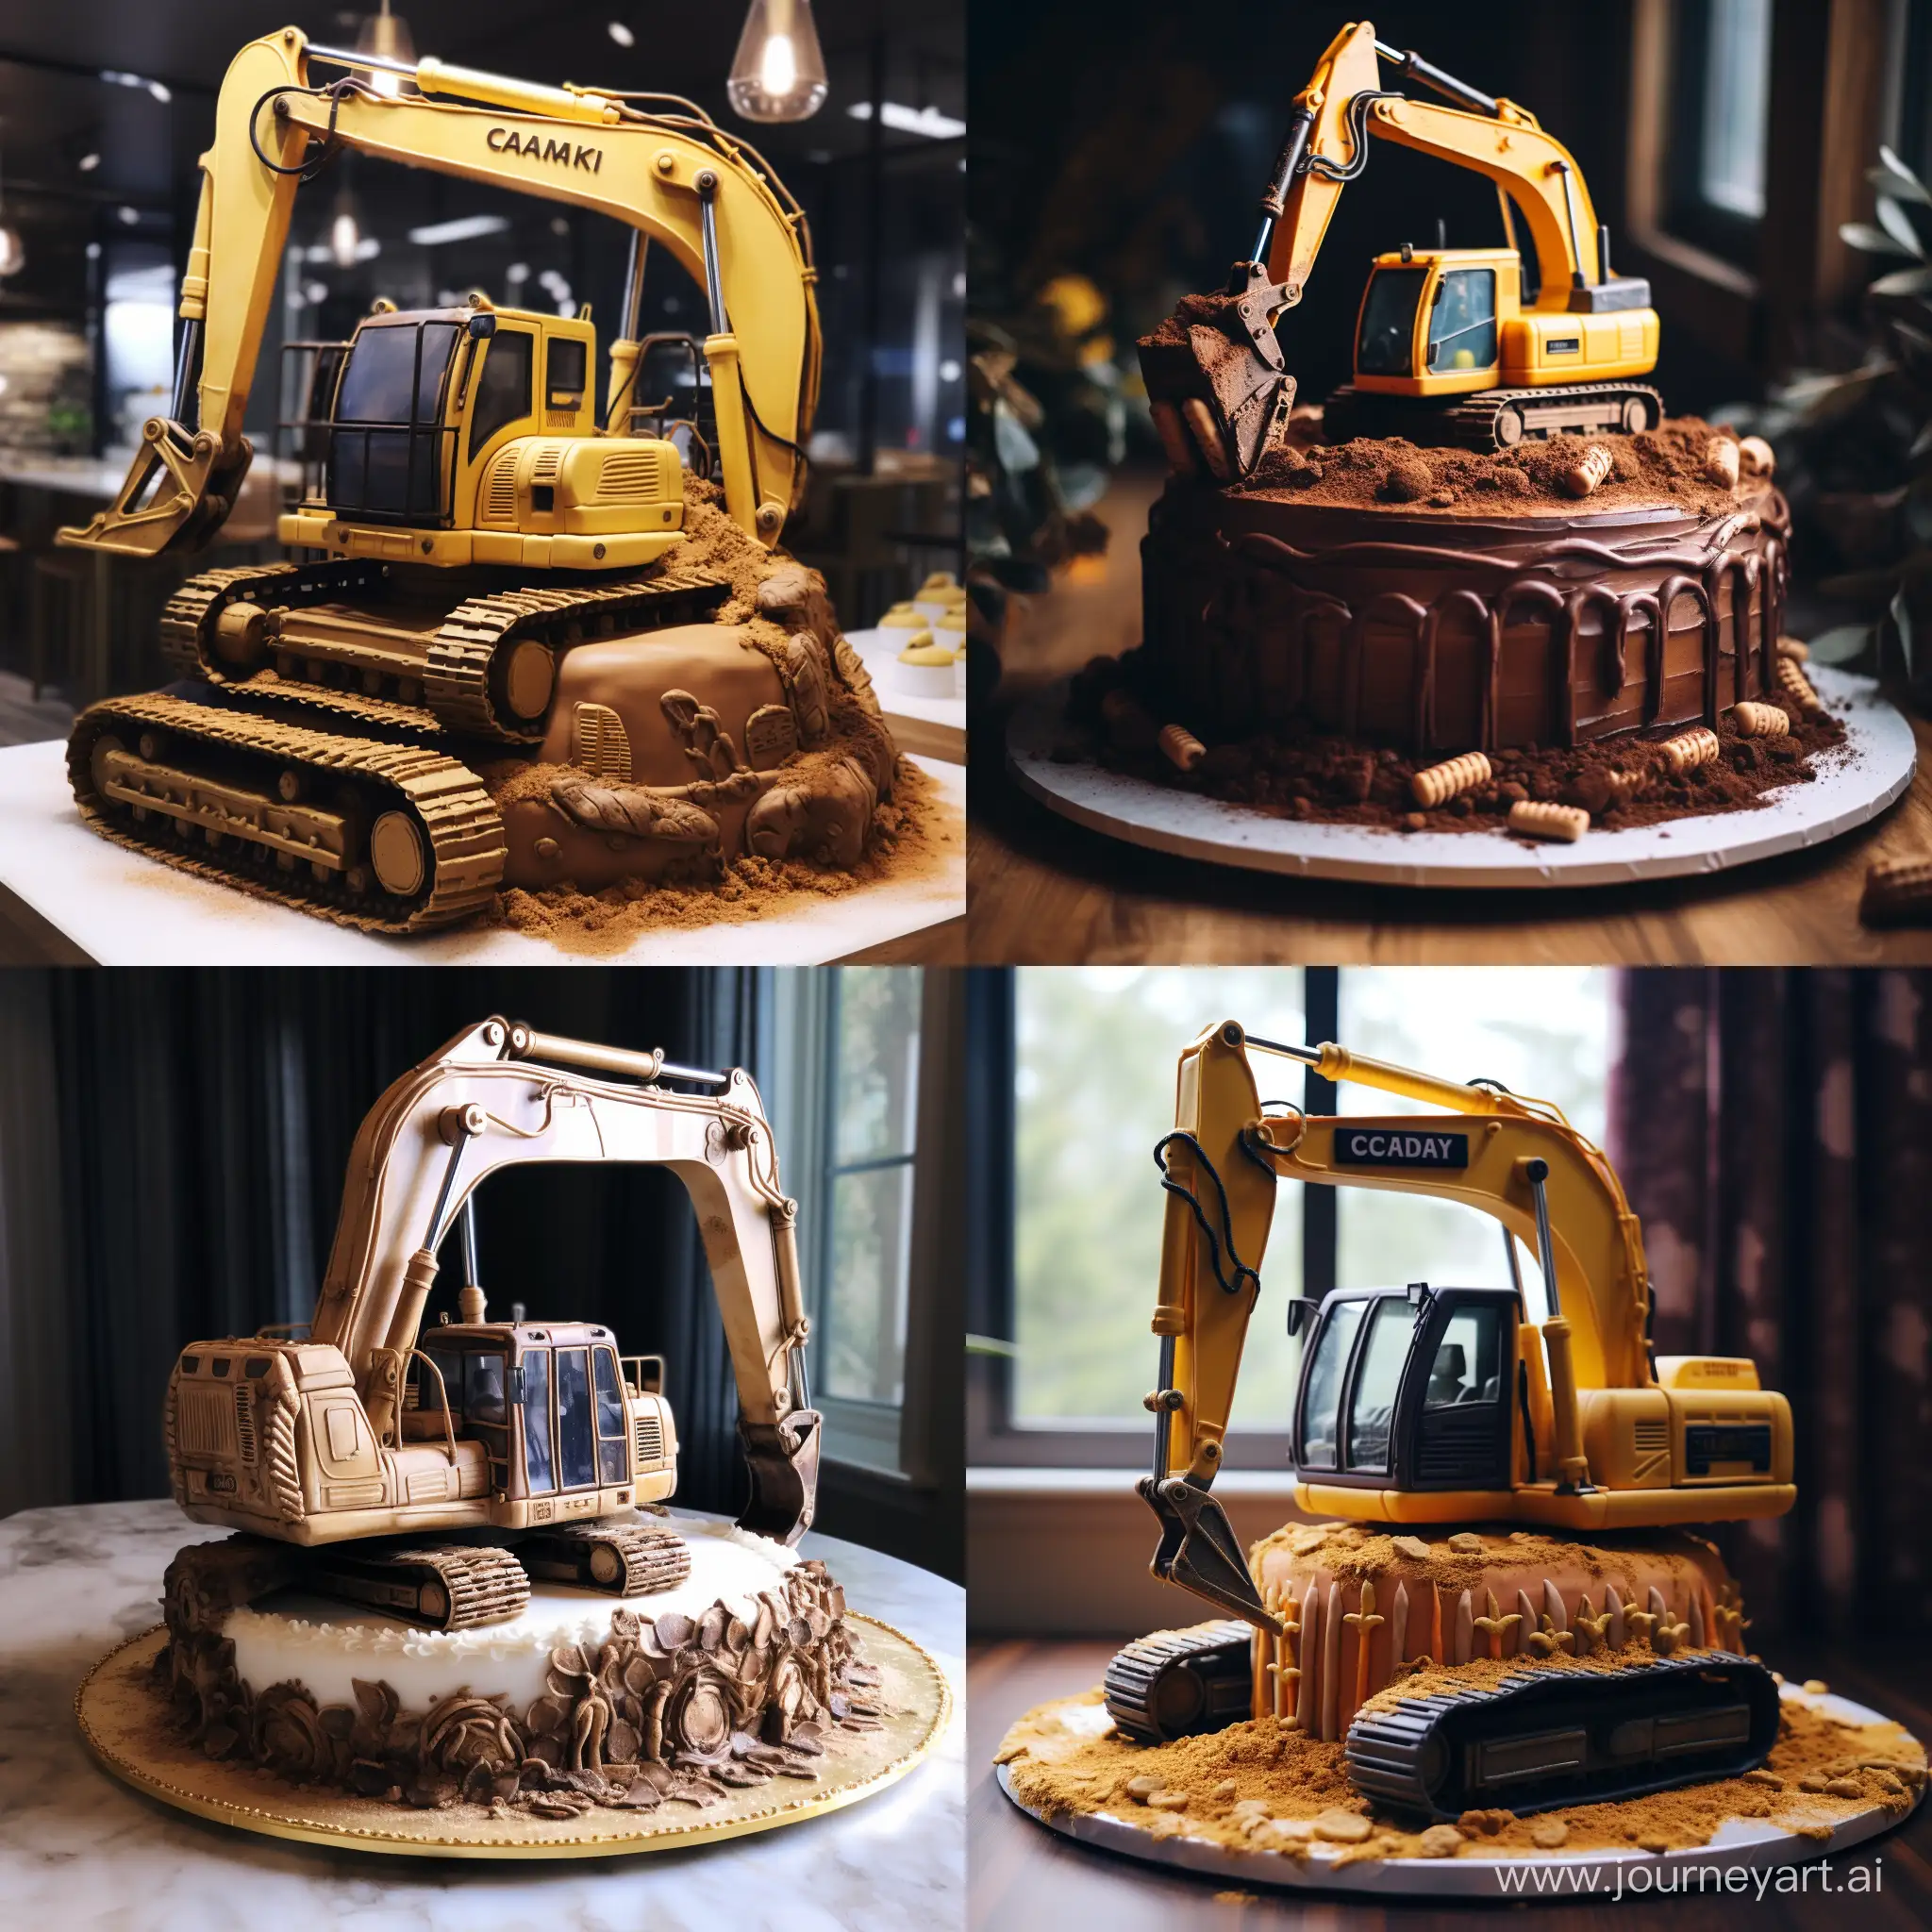 Realistic cake with excavator